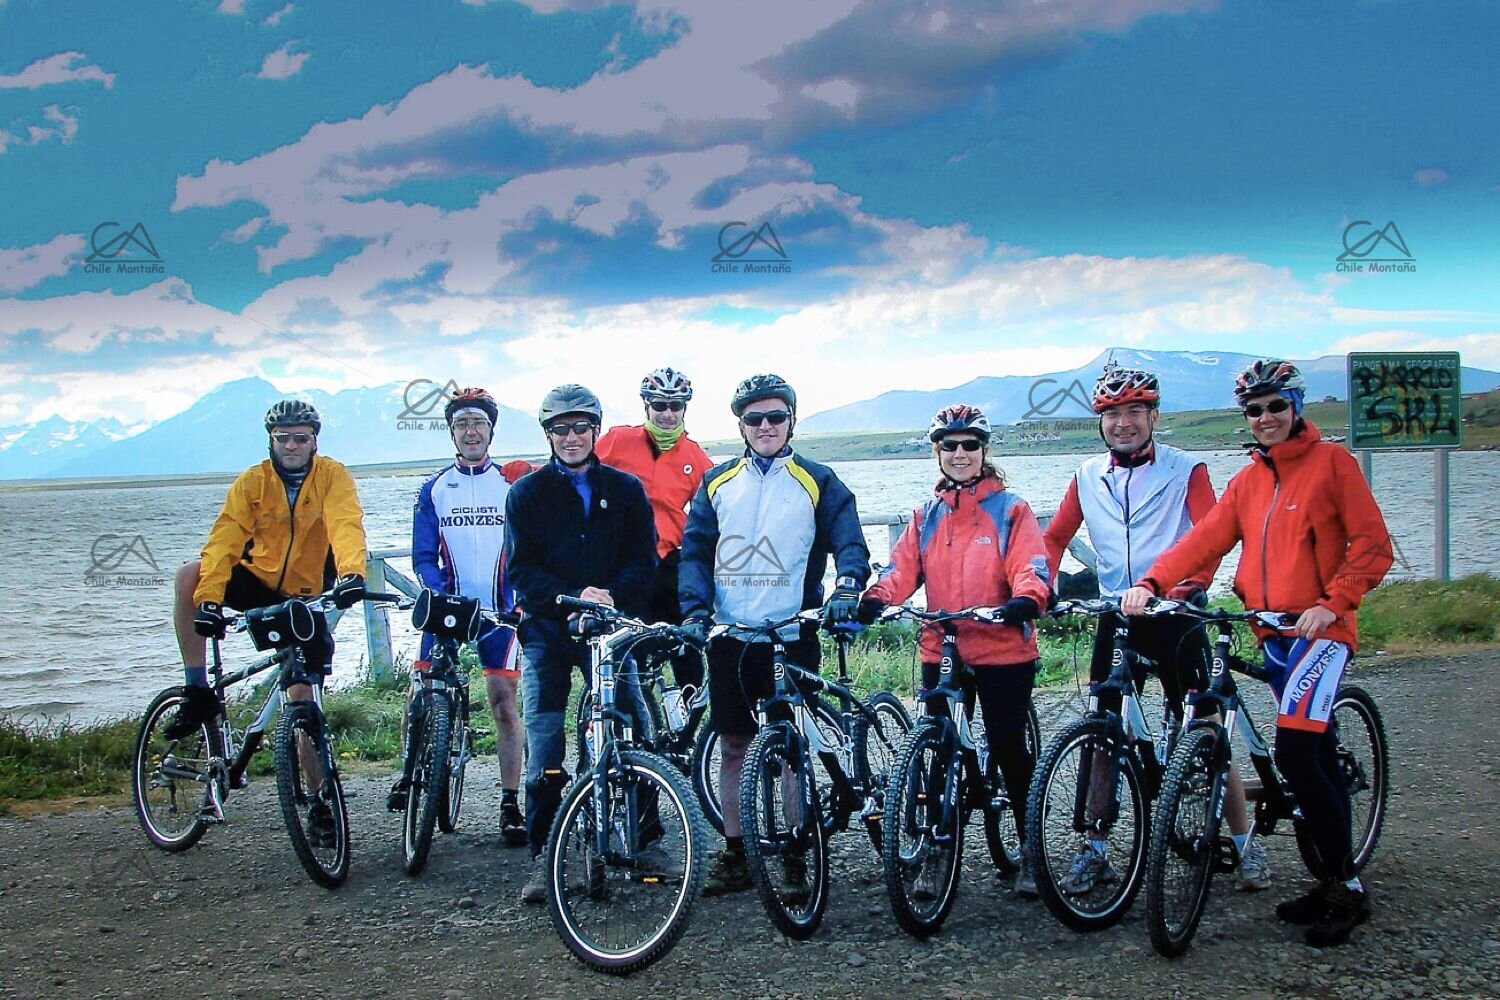 ChileMontana Torres del Paine Bike Tour (WM) 04.jpg